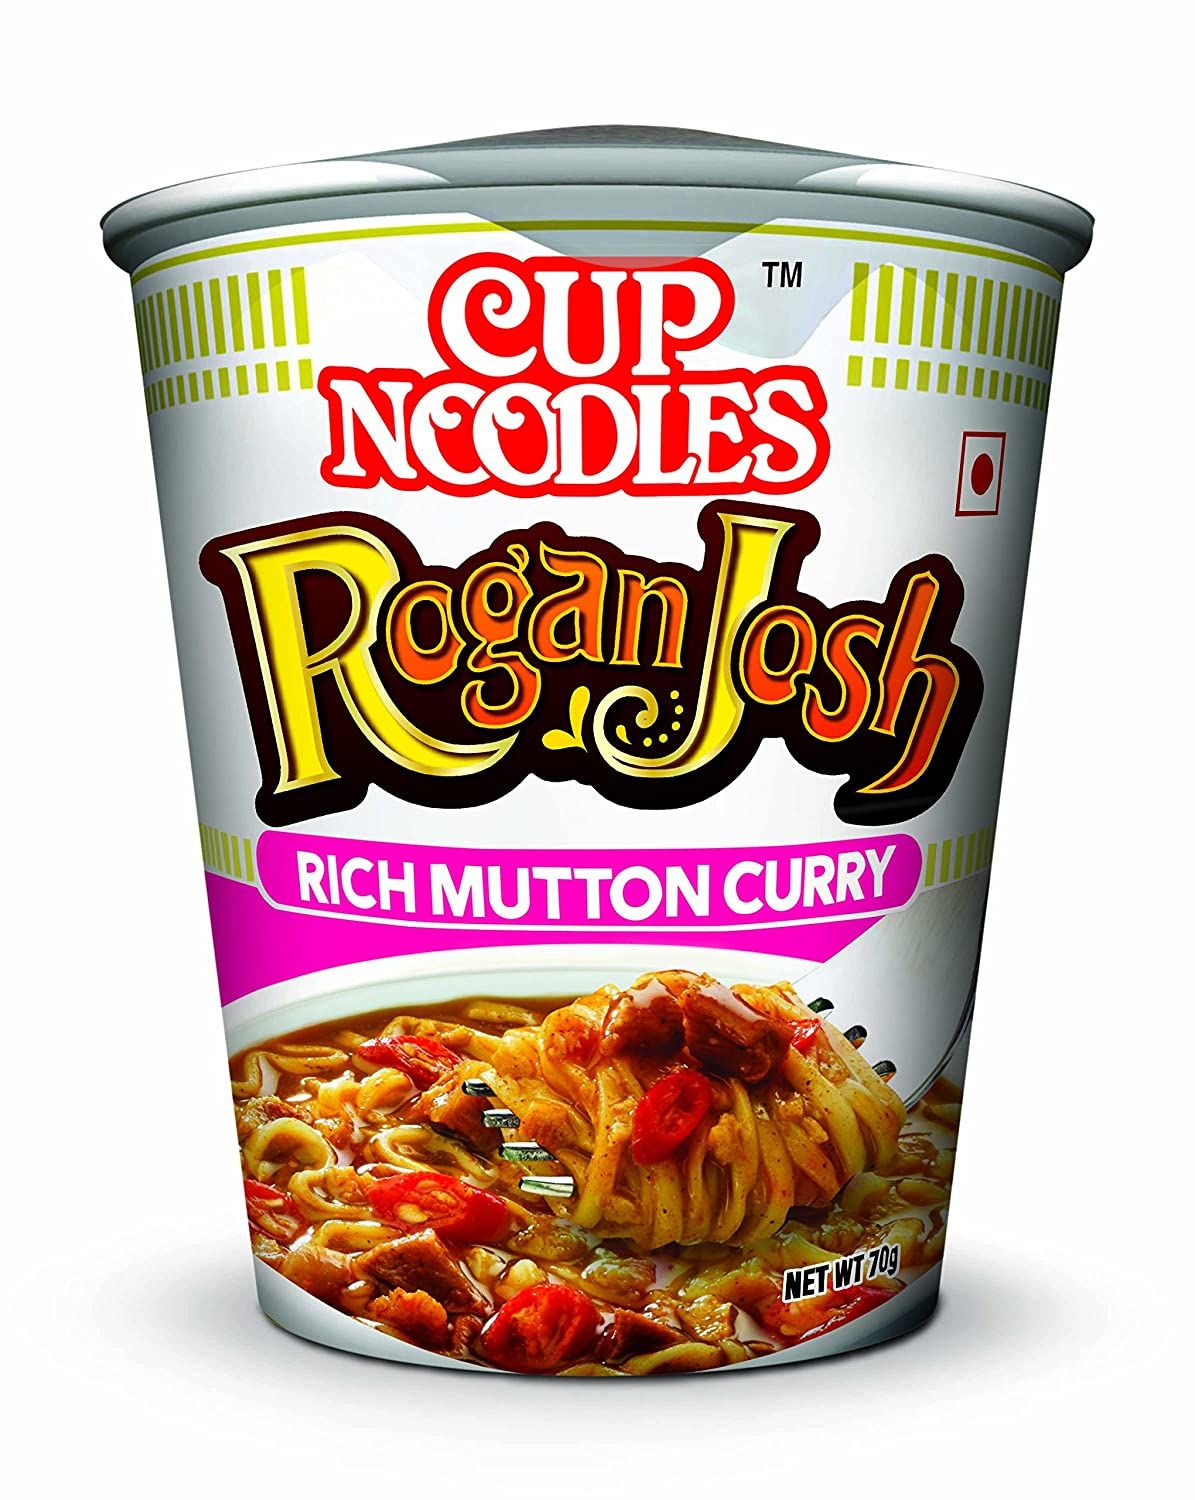 Cup Noodles Rogan Josh Image